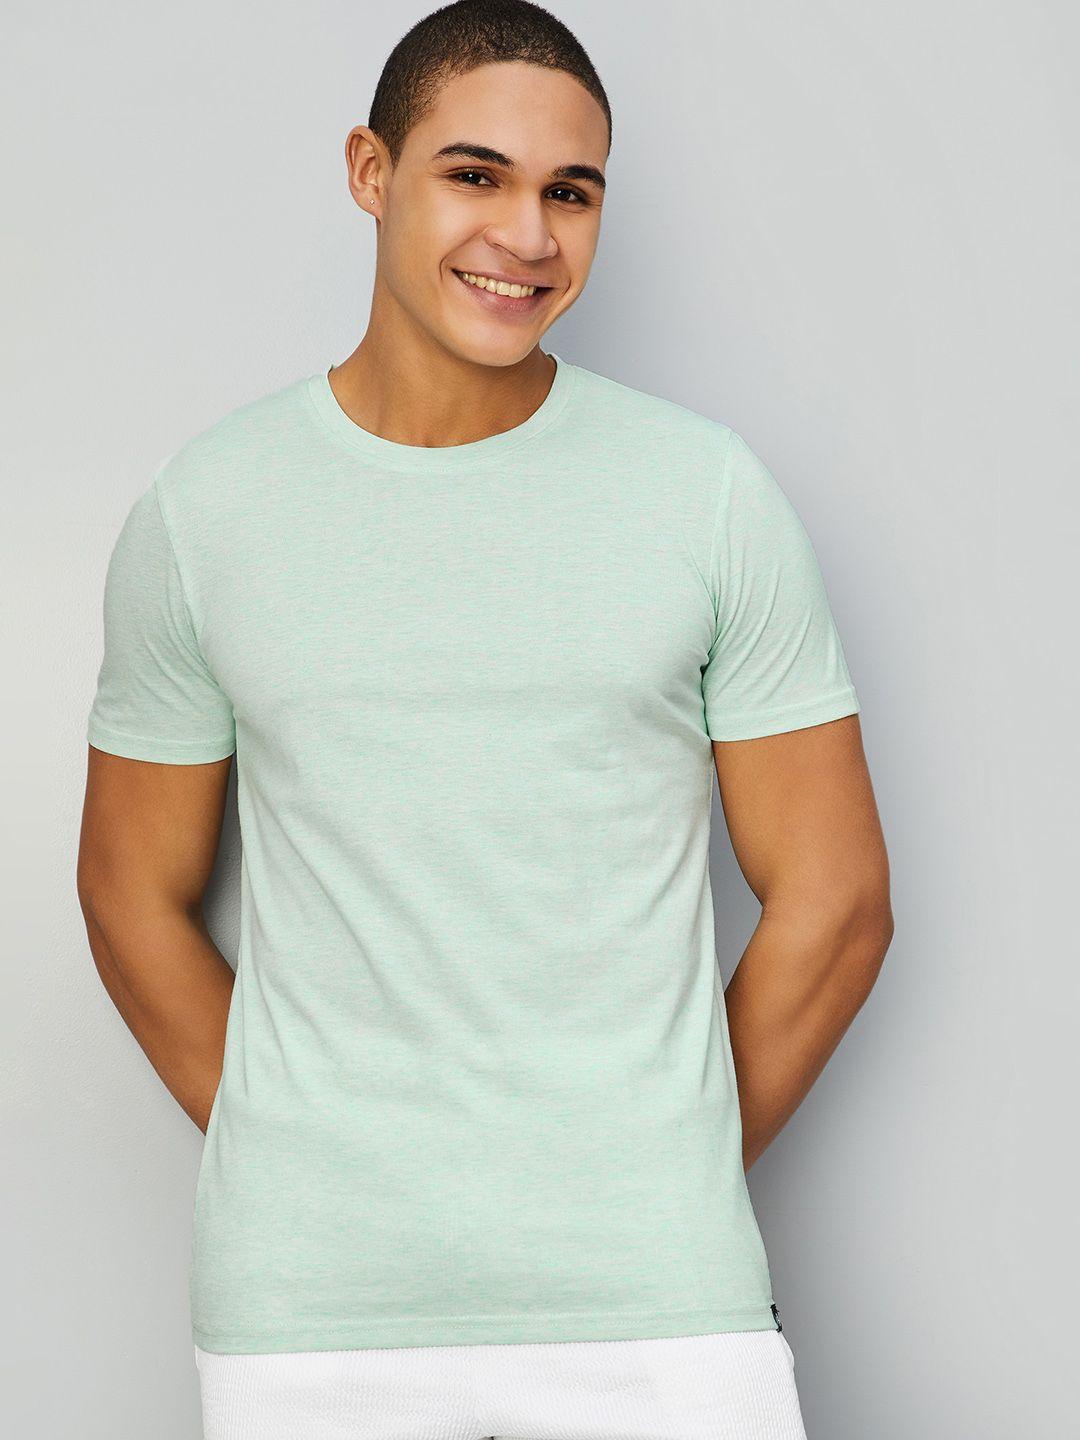 max-round-neck-short-sleeves-cotton-t-shirt